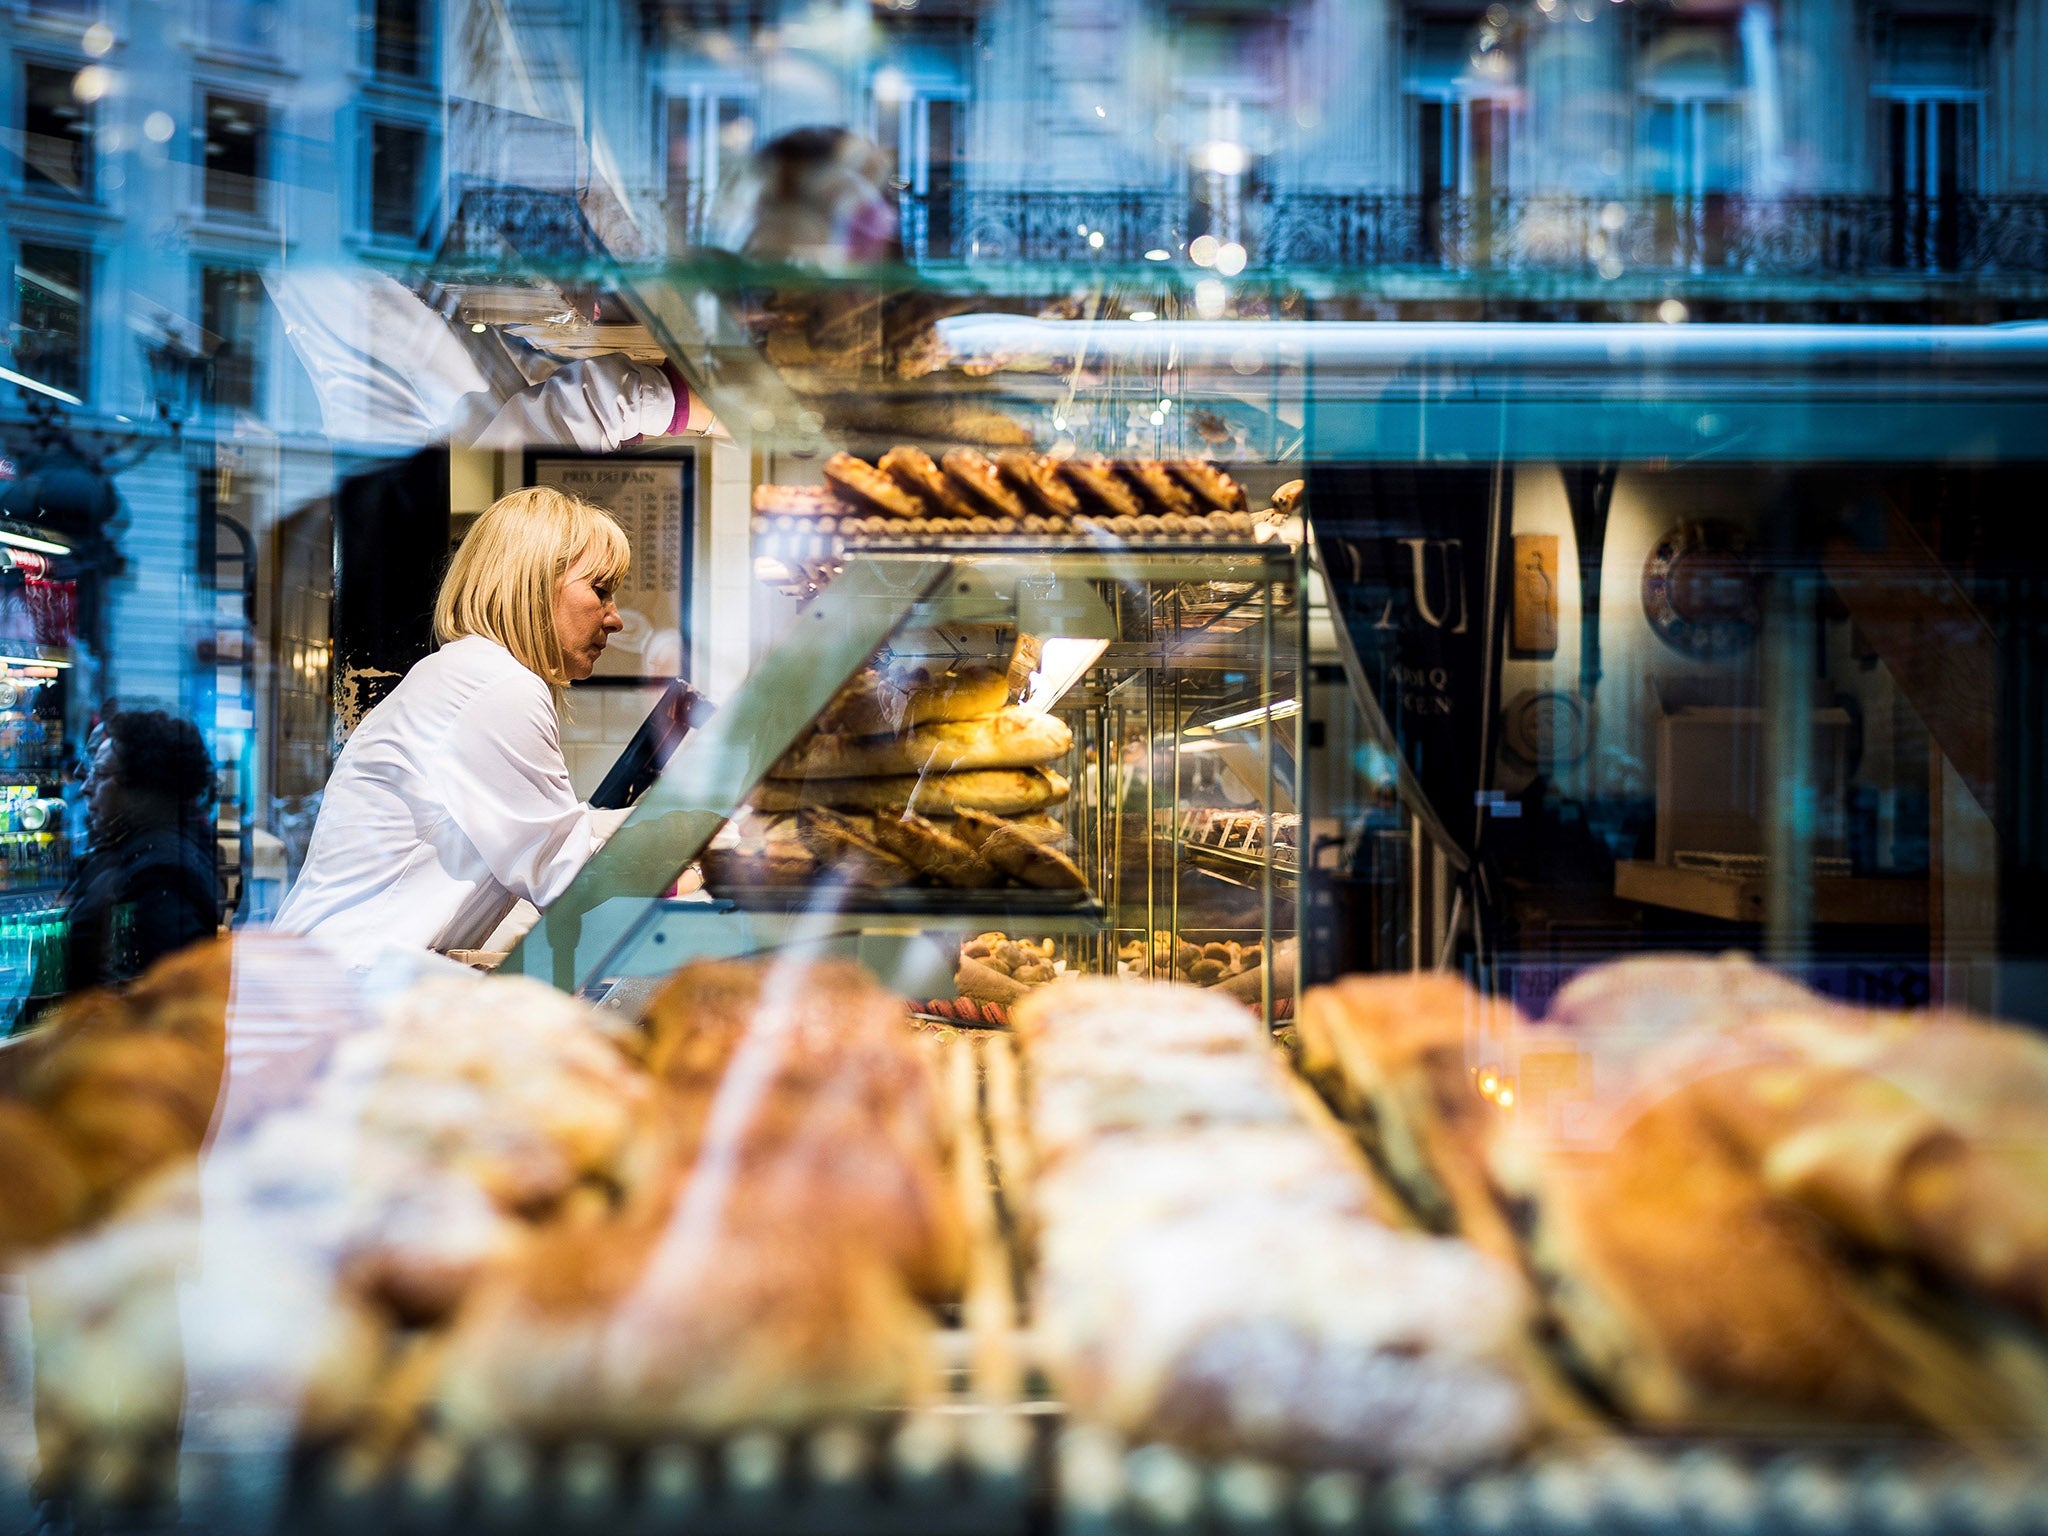 Cities like Paris still enjoy the bakery tradition